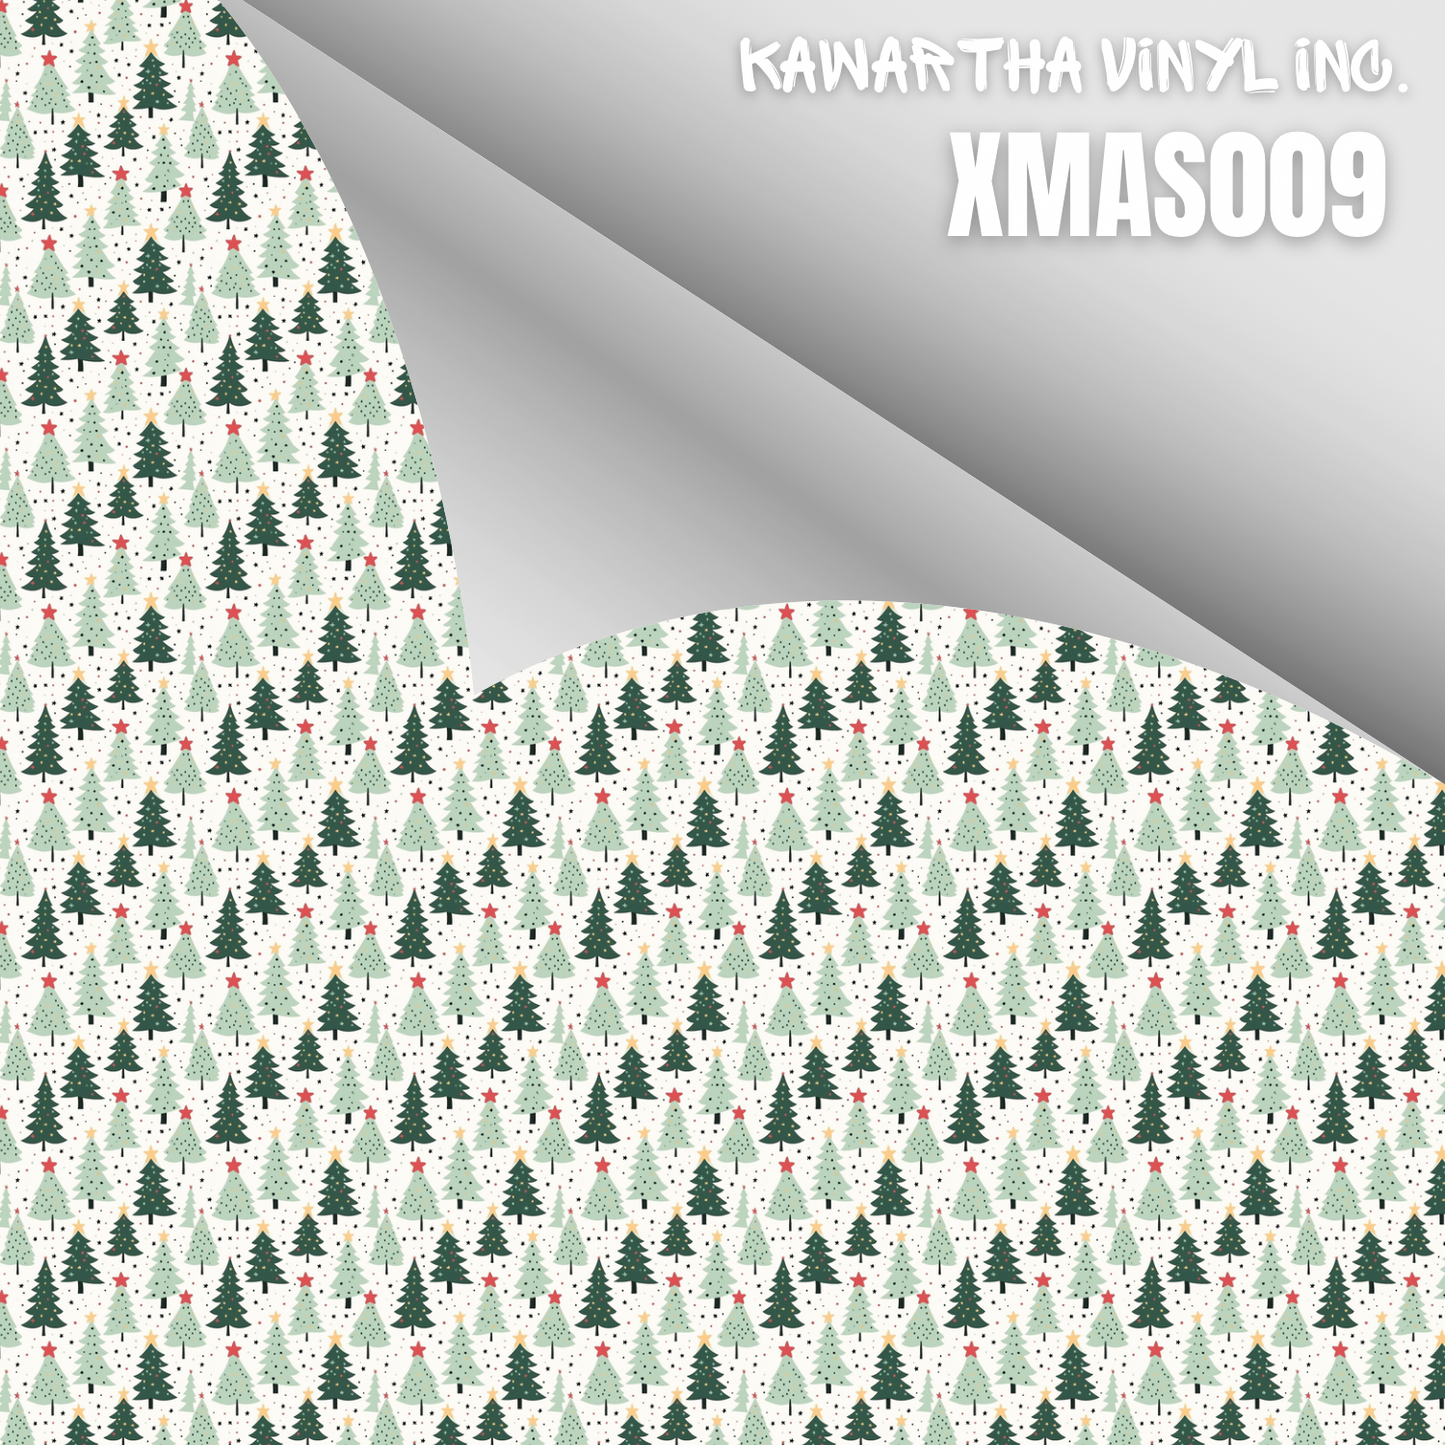 XMAS009 Adhesive & HTV Patterns